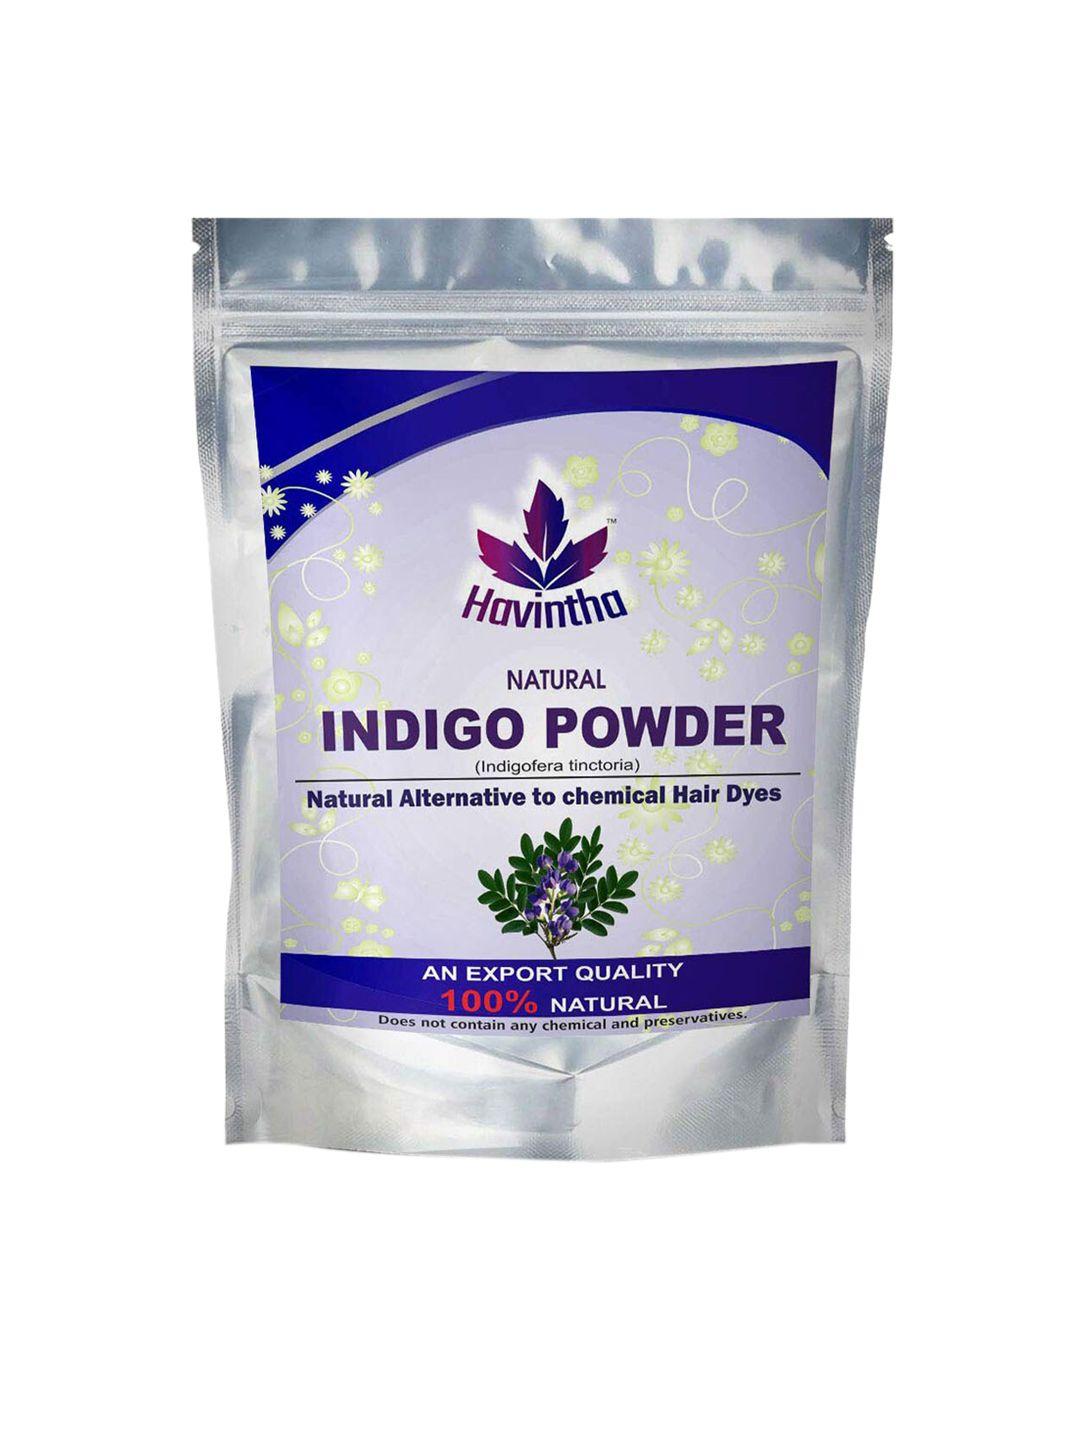 havintha black indigo powder for hair & beard colour (indigofera tinctoria)